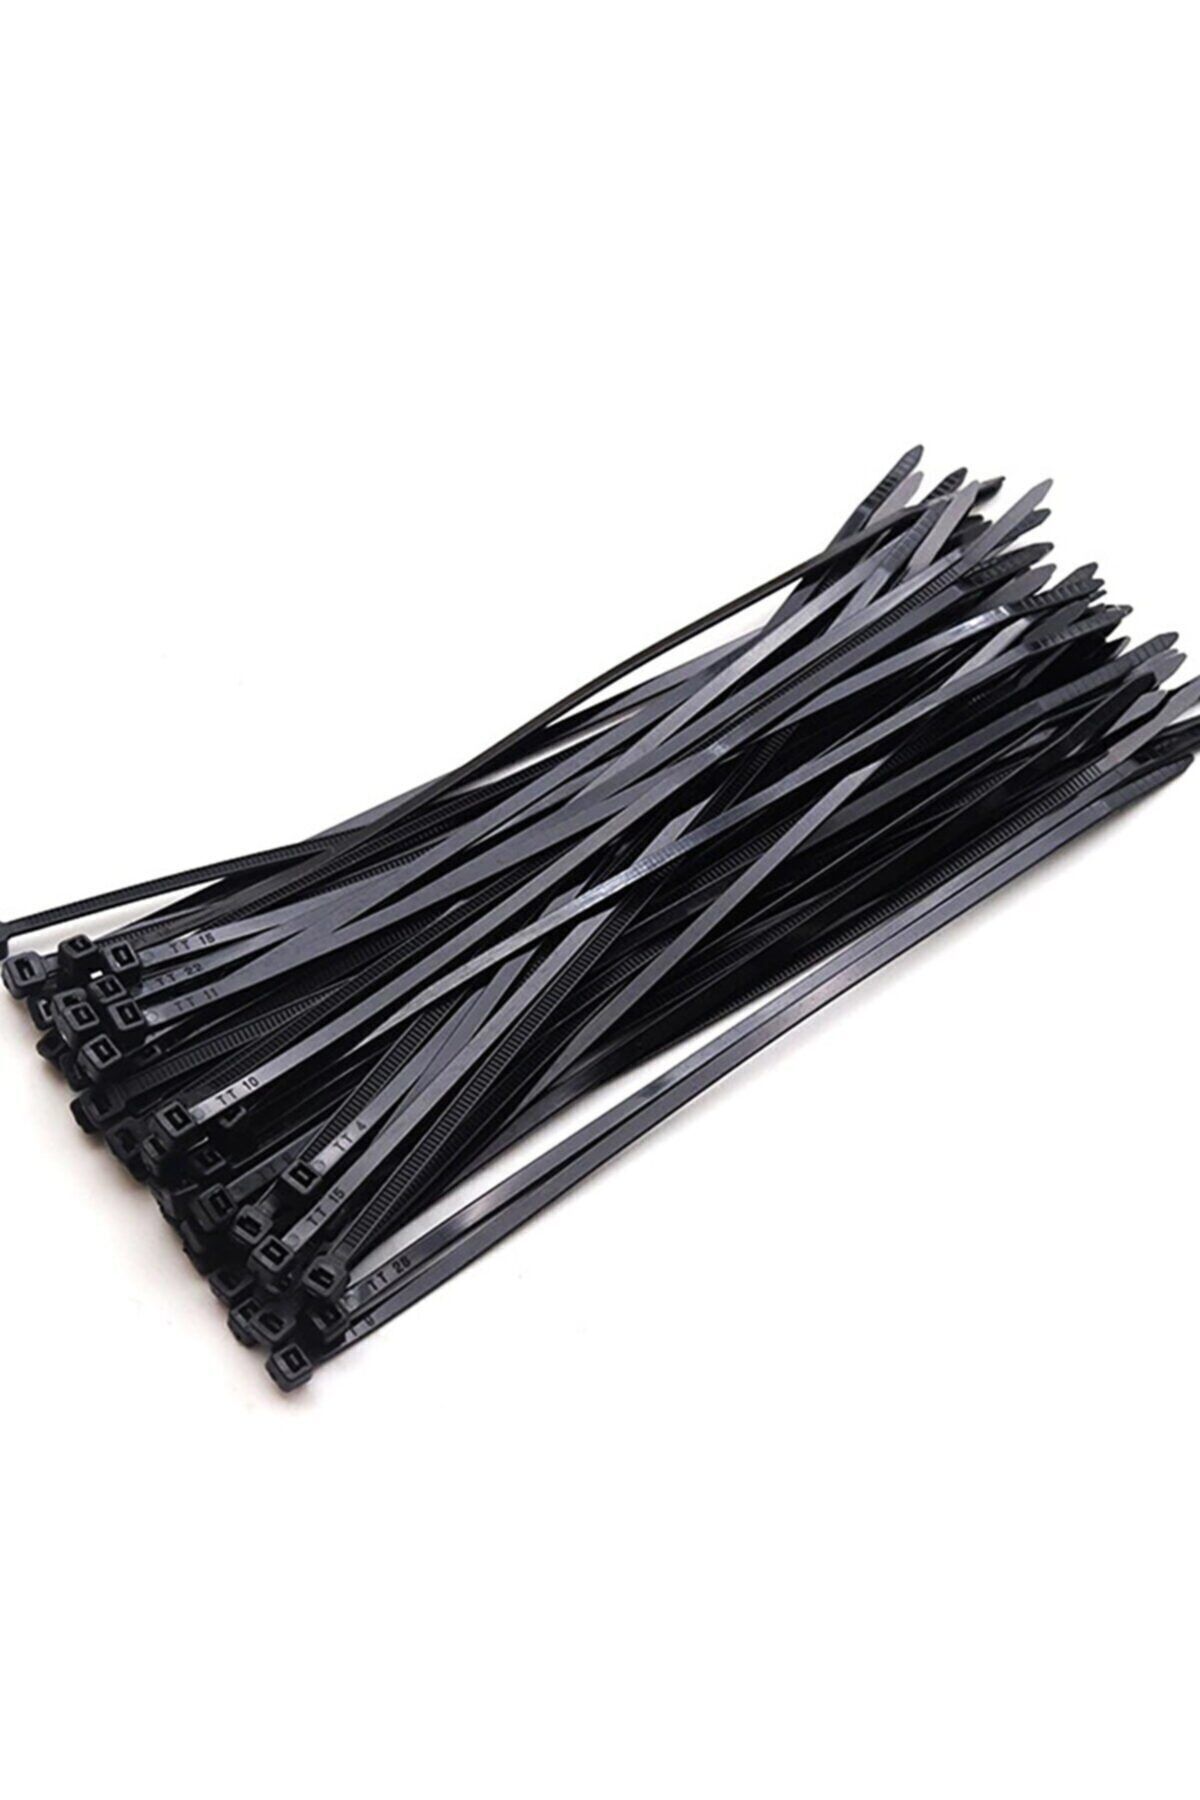 MJ VİSİON 100 Adet Siyah Plastik Kelepçe Cırt Kablo 2.5 10cm Uzunluk.